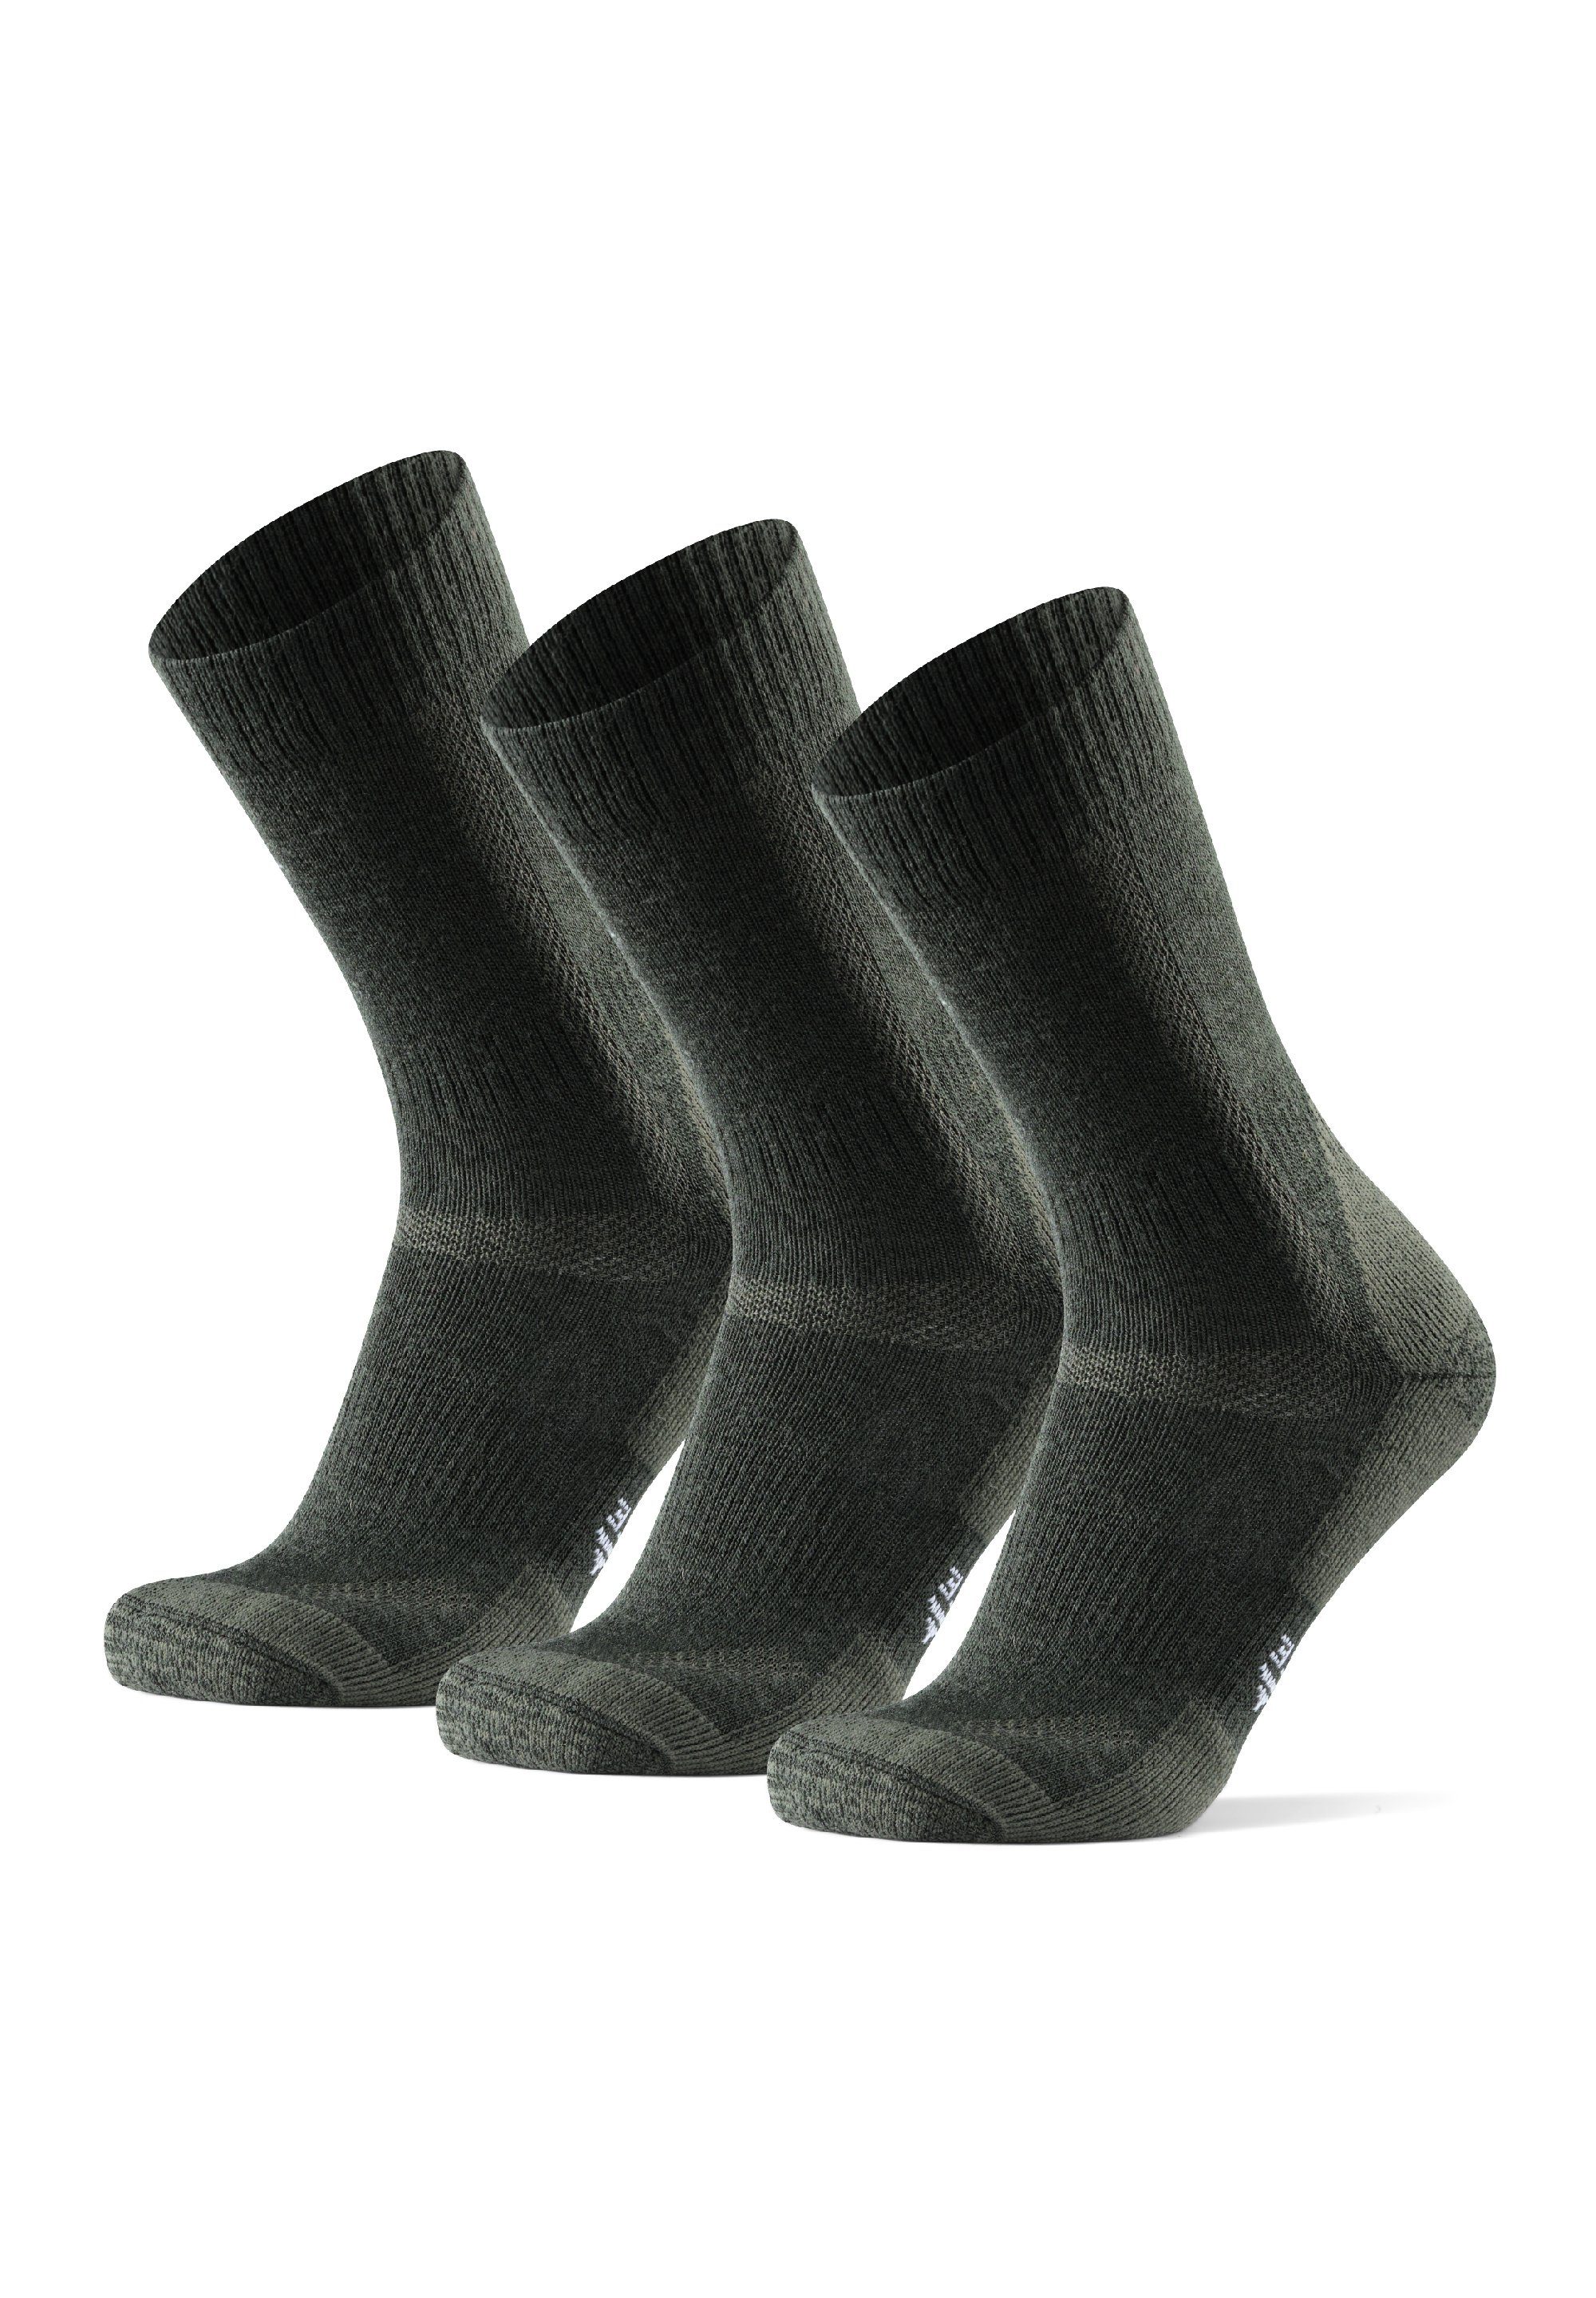 DANISH ENDURANCE Wandersocken Merino Hiking Classic Socks (Packung, 3-Paar) Anti-Blasen, für Herren, Damen & Kinder forest green | Wandersocken